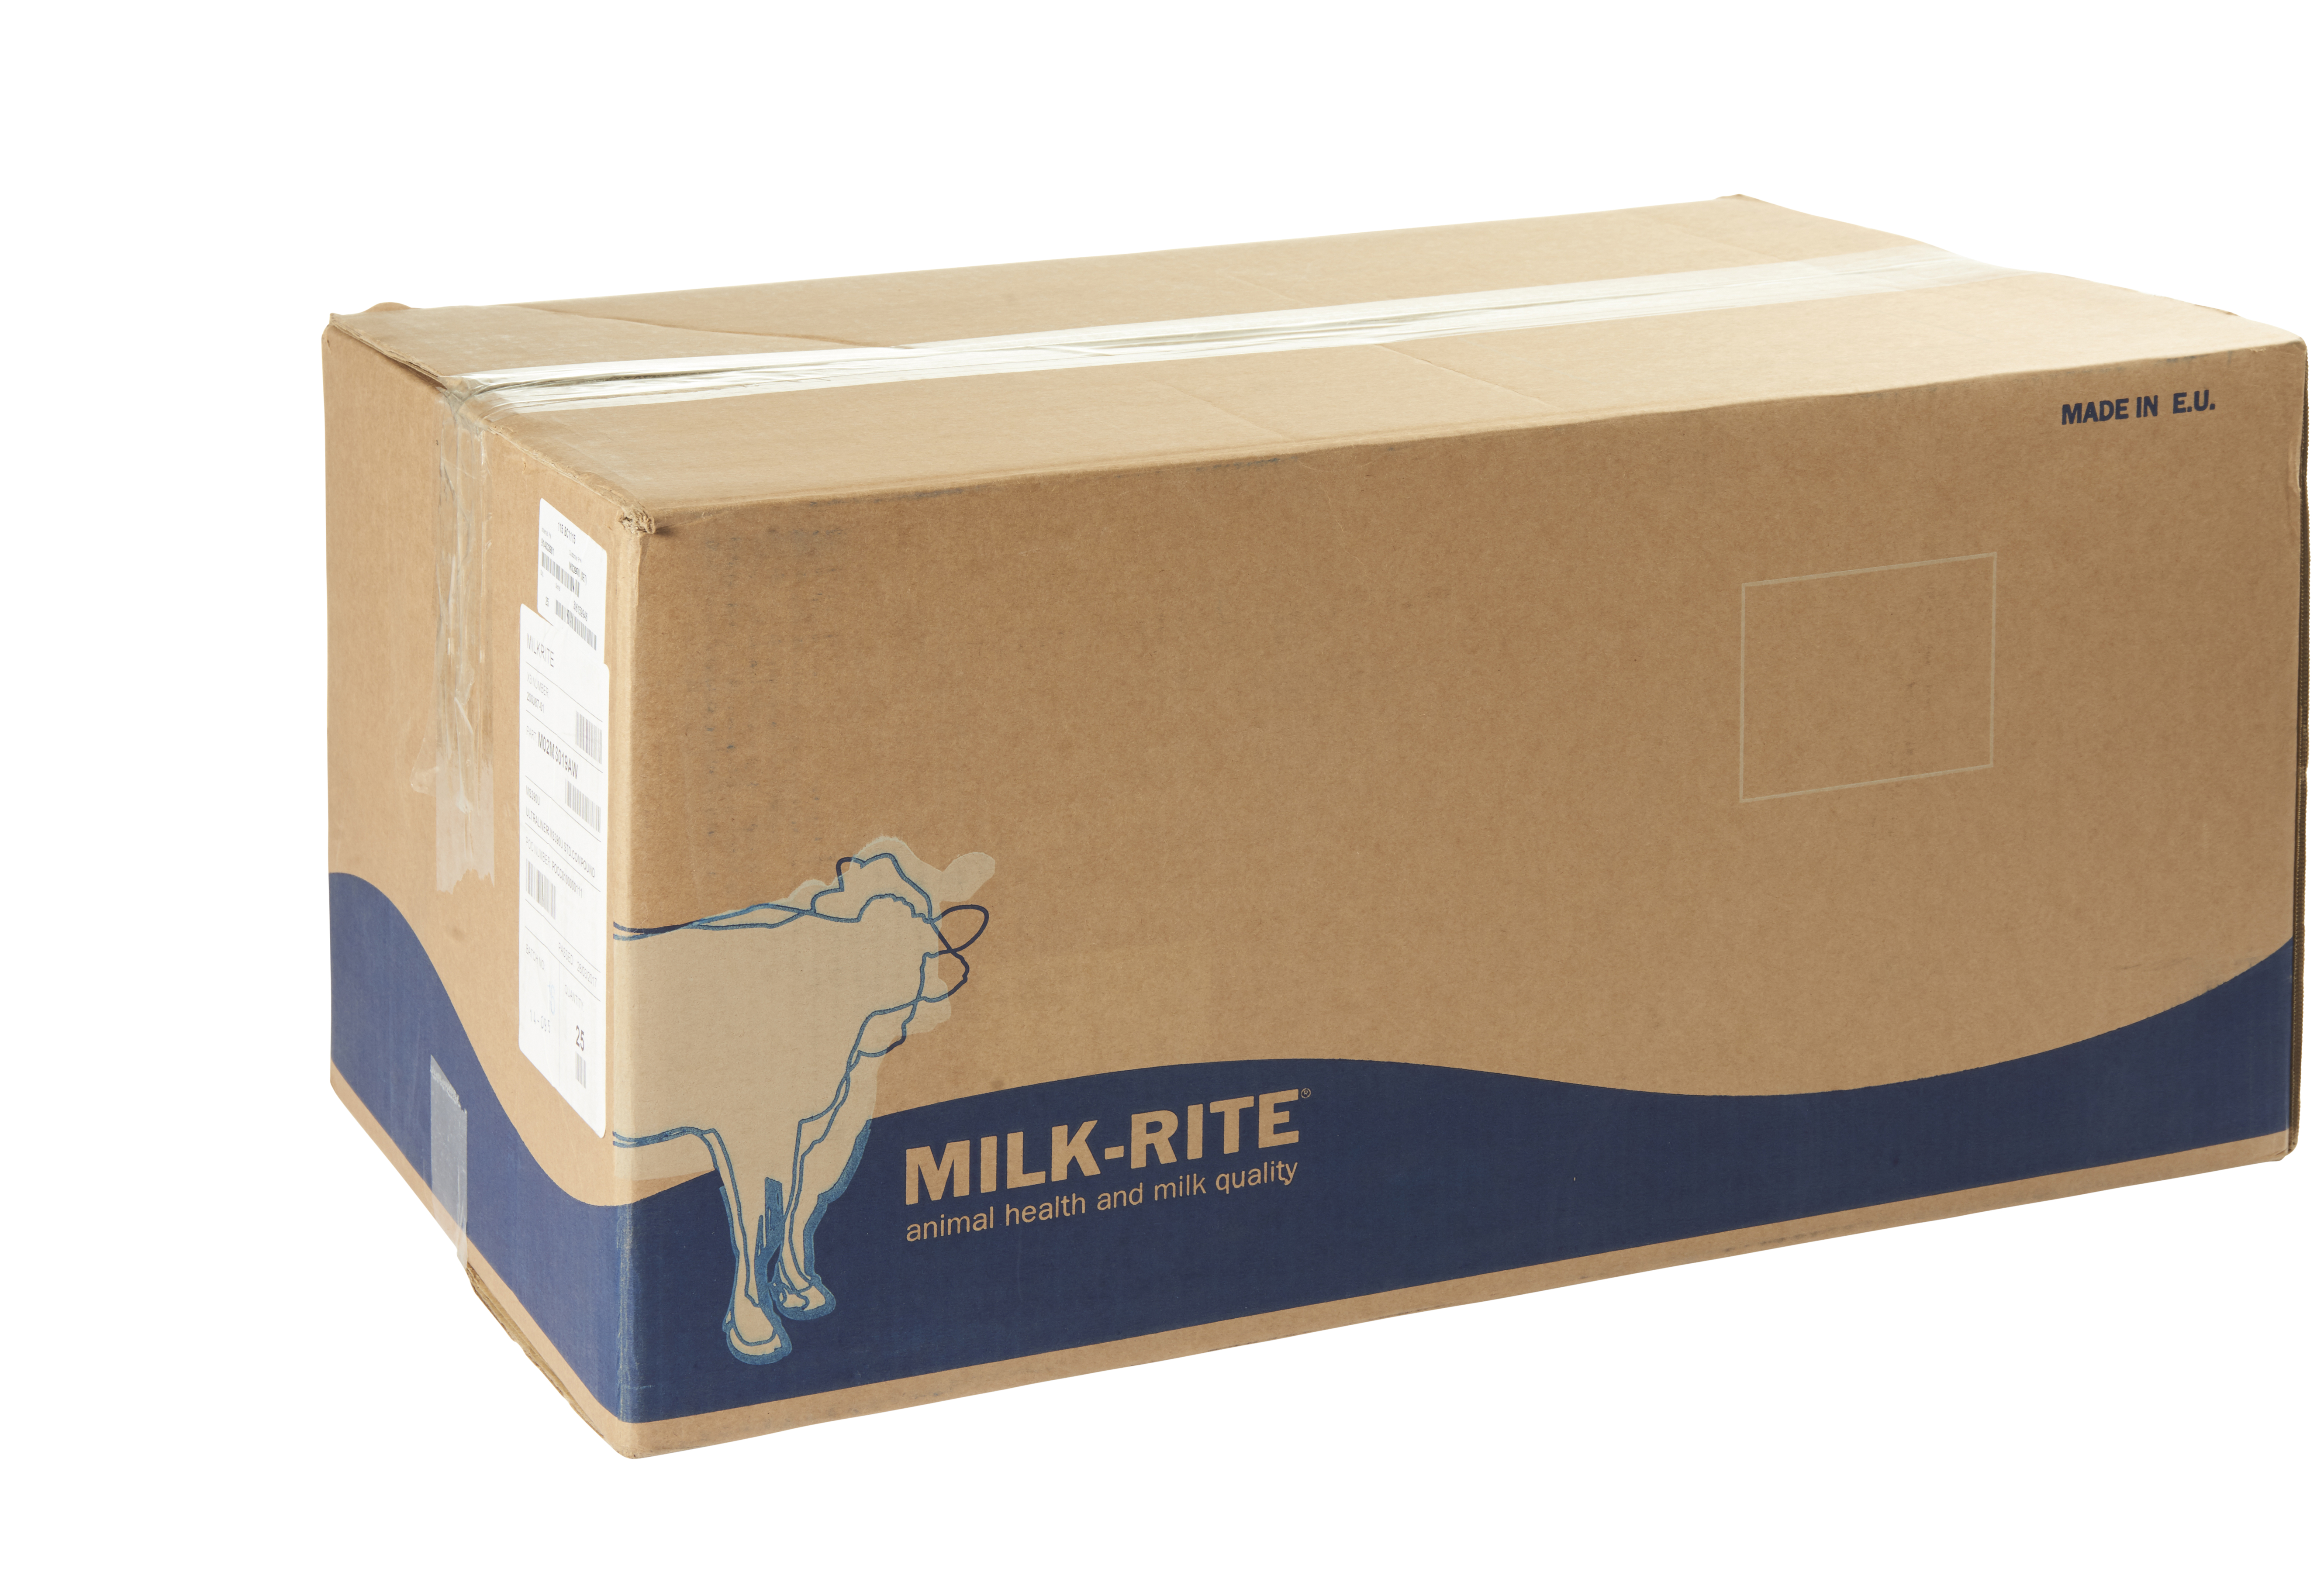 Zitzengummi Milk-Rite WS230U à 4 Stück 7021-2725-230